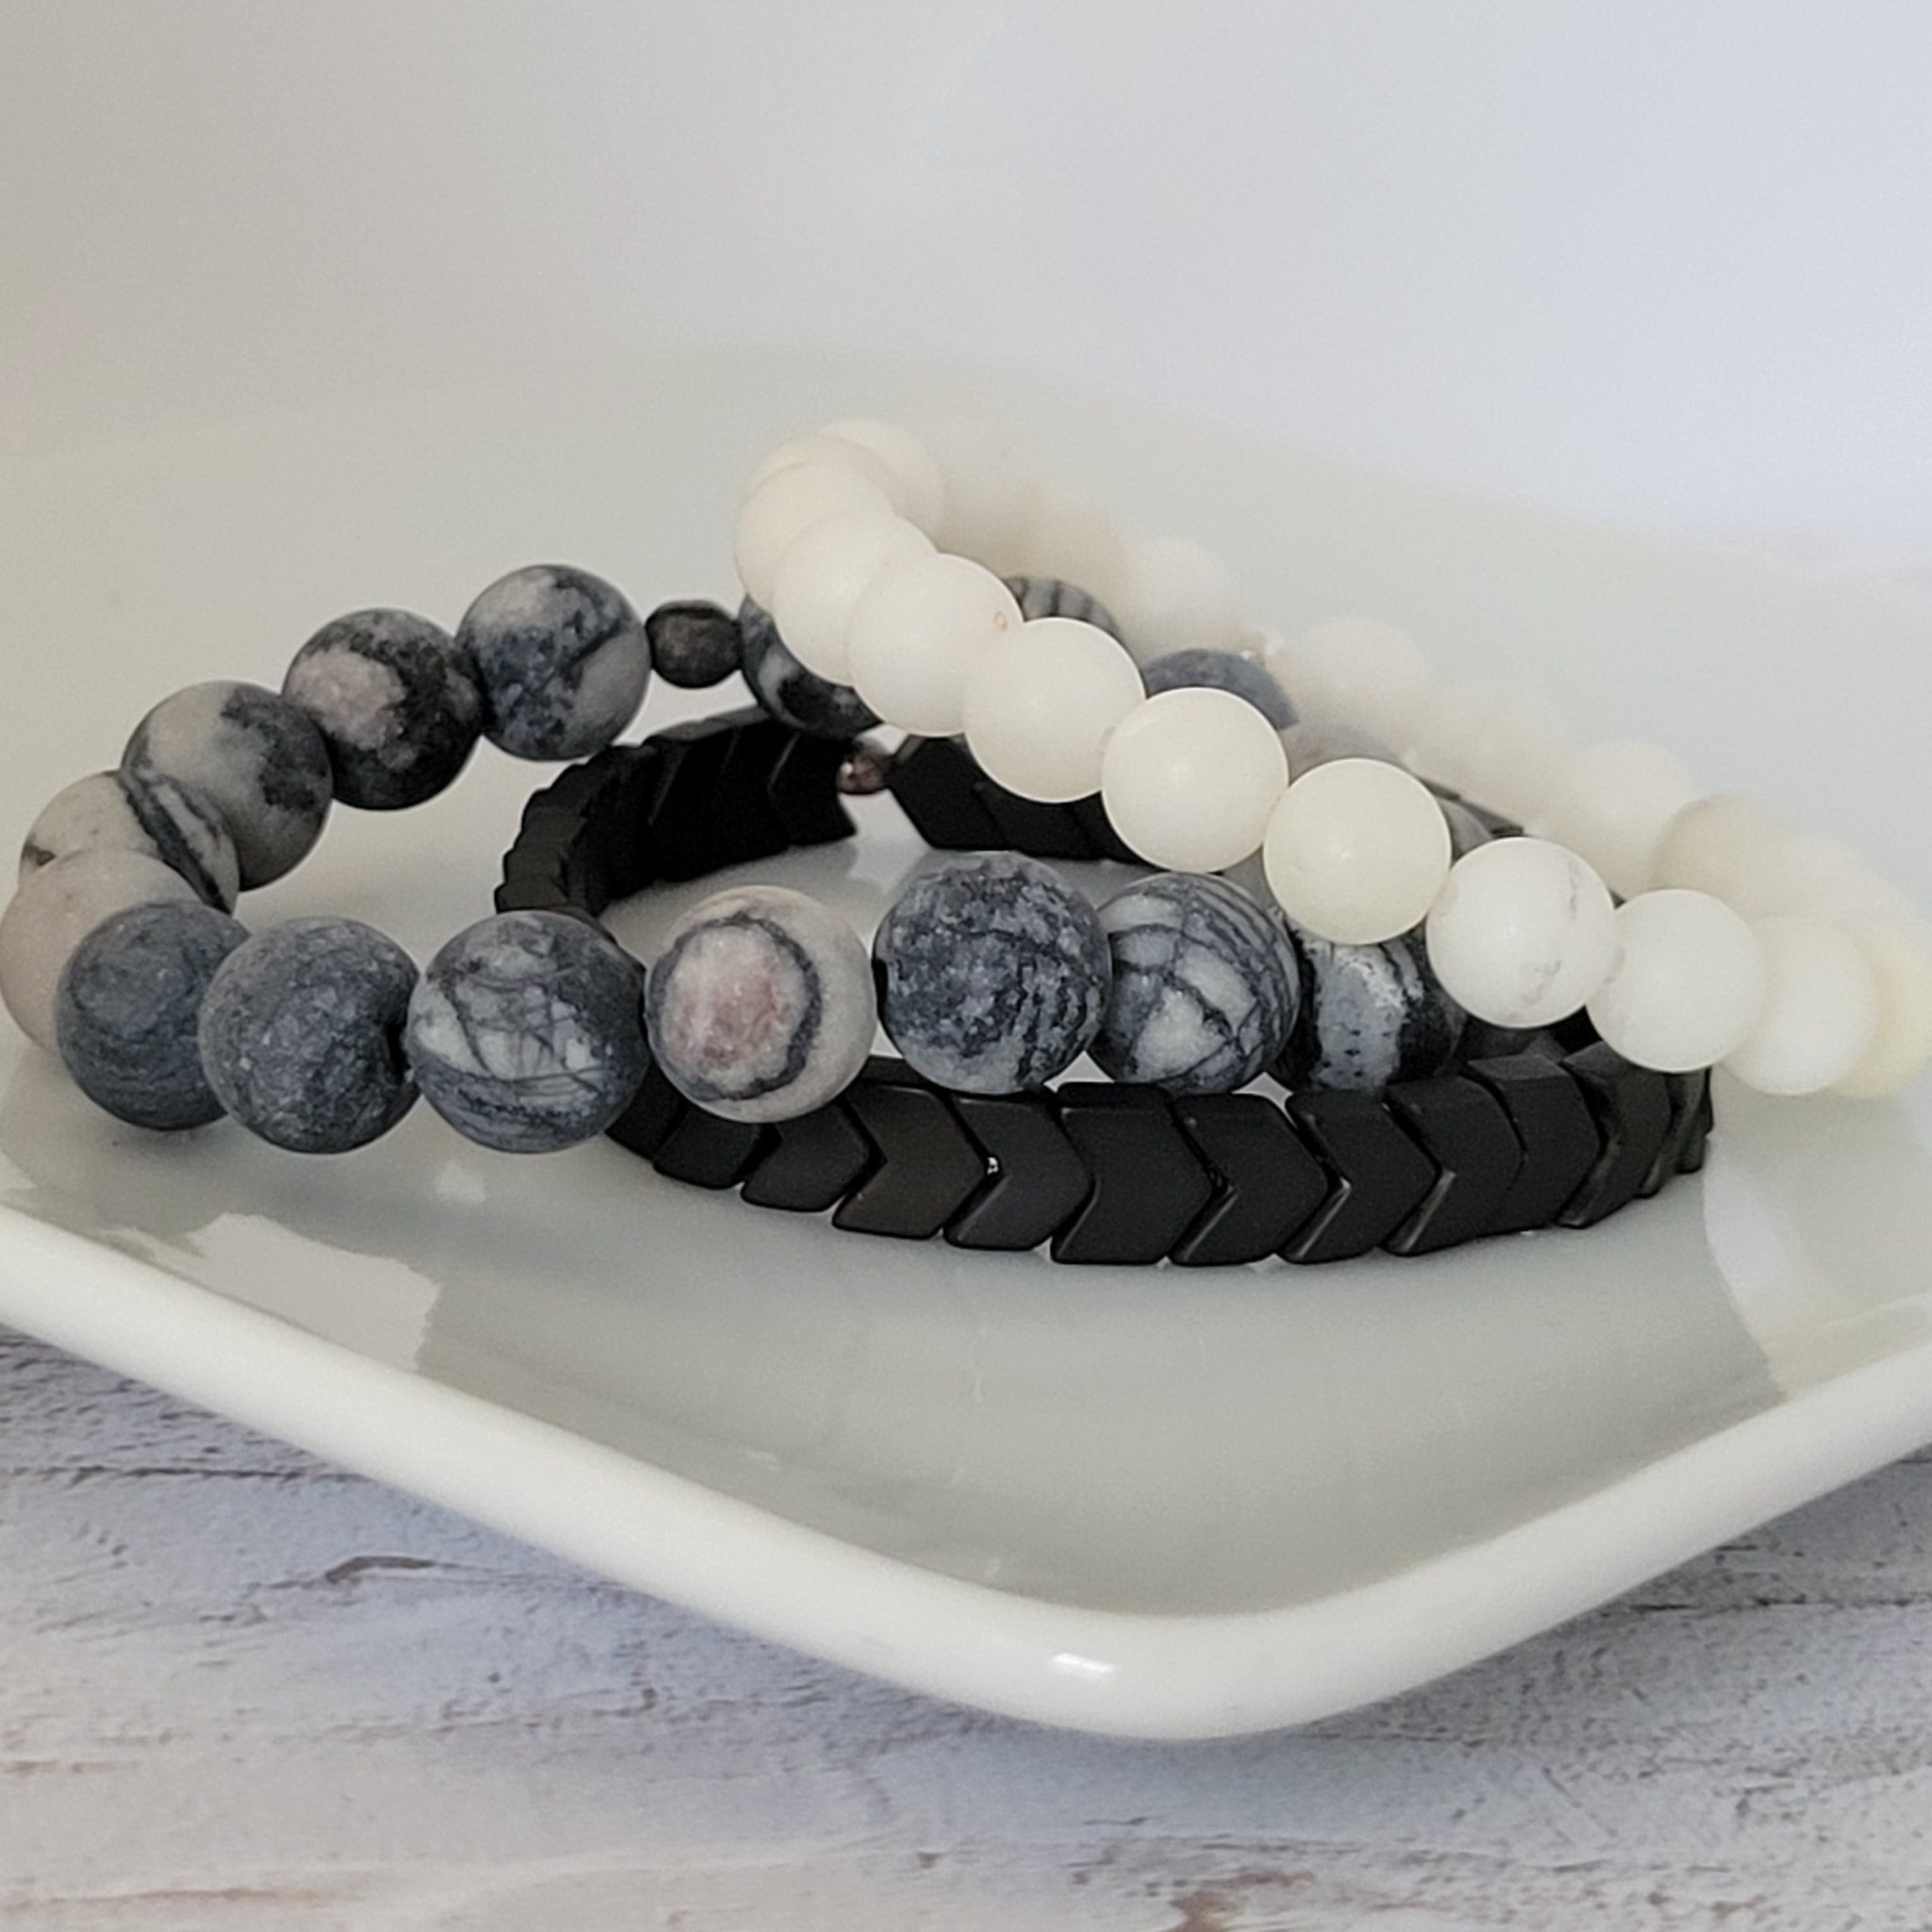 Monochrome Natural Stone Bead Bracelet Set - 3pc Set or Each